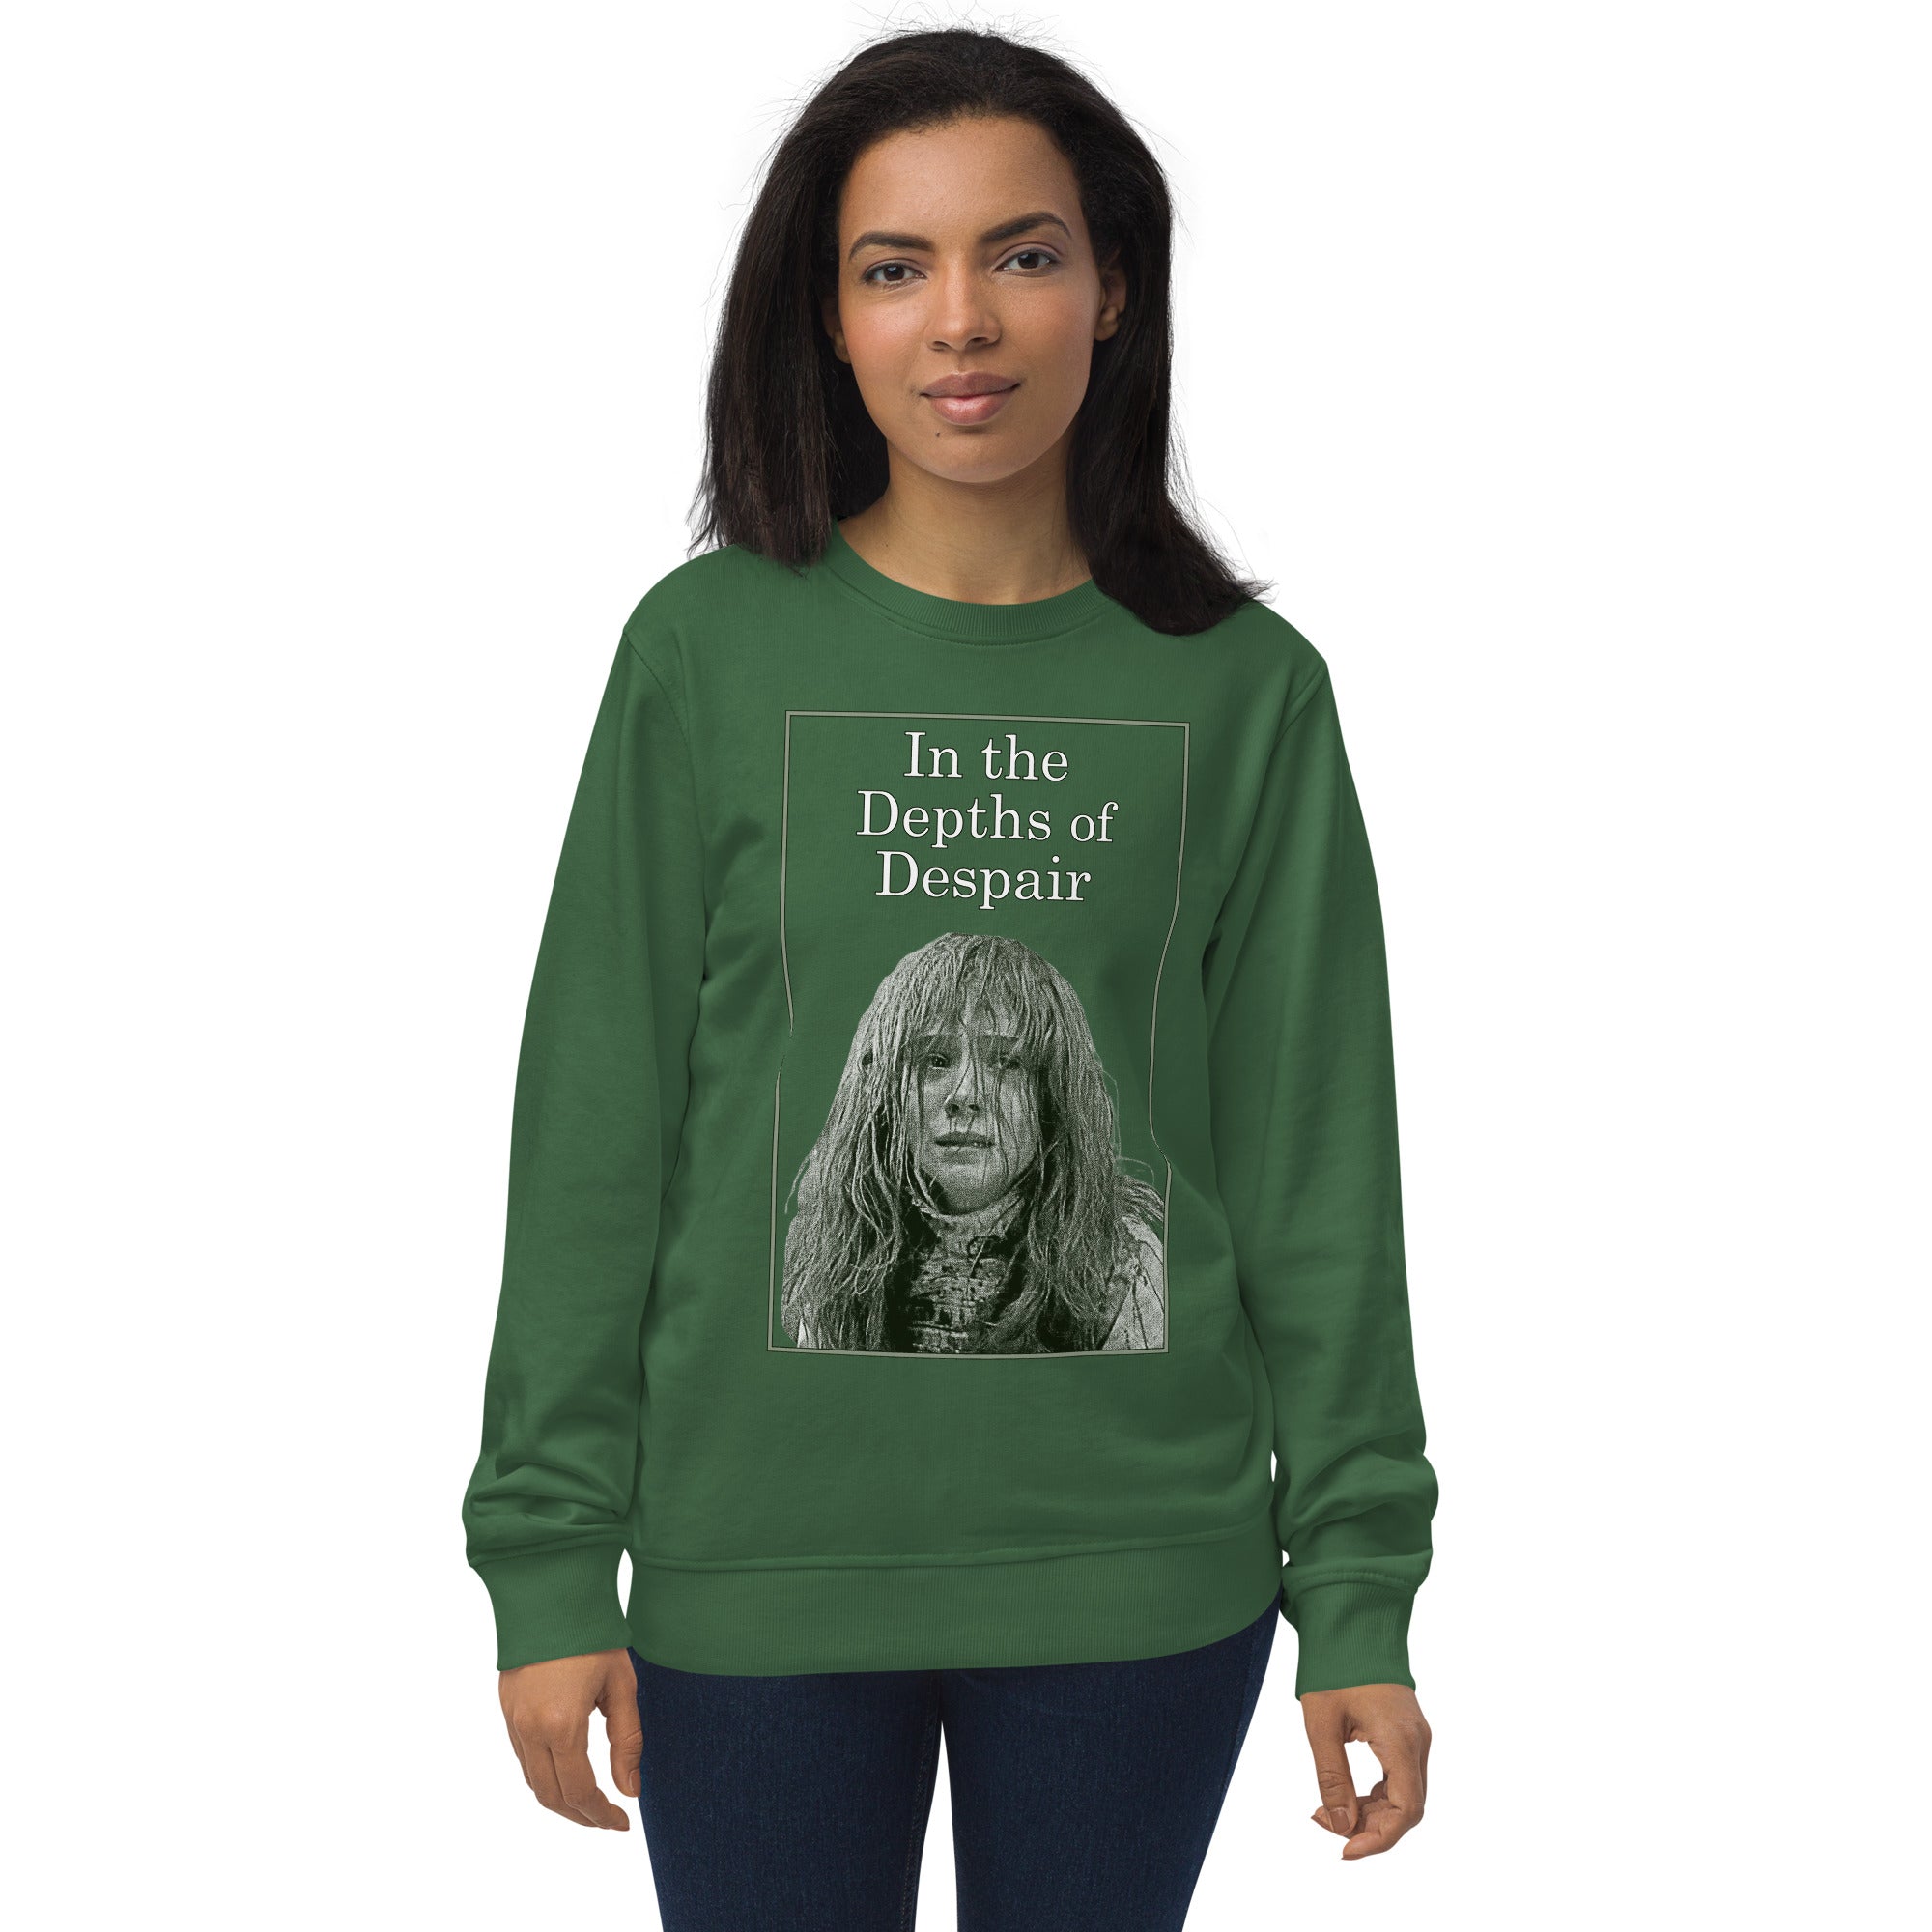 In the Depths of Despair Sweatshirt-Limited Edition